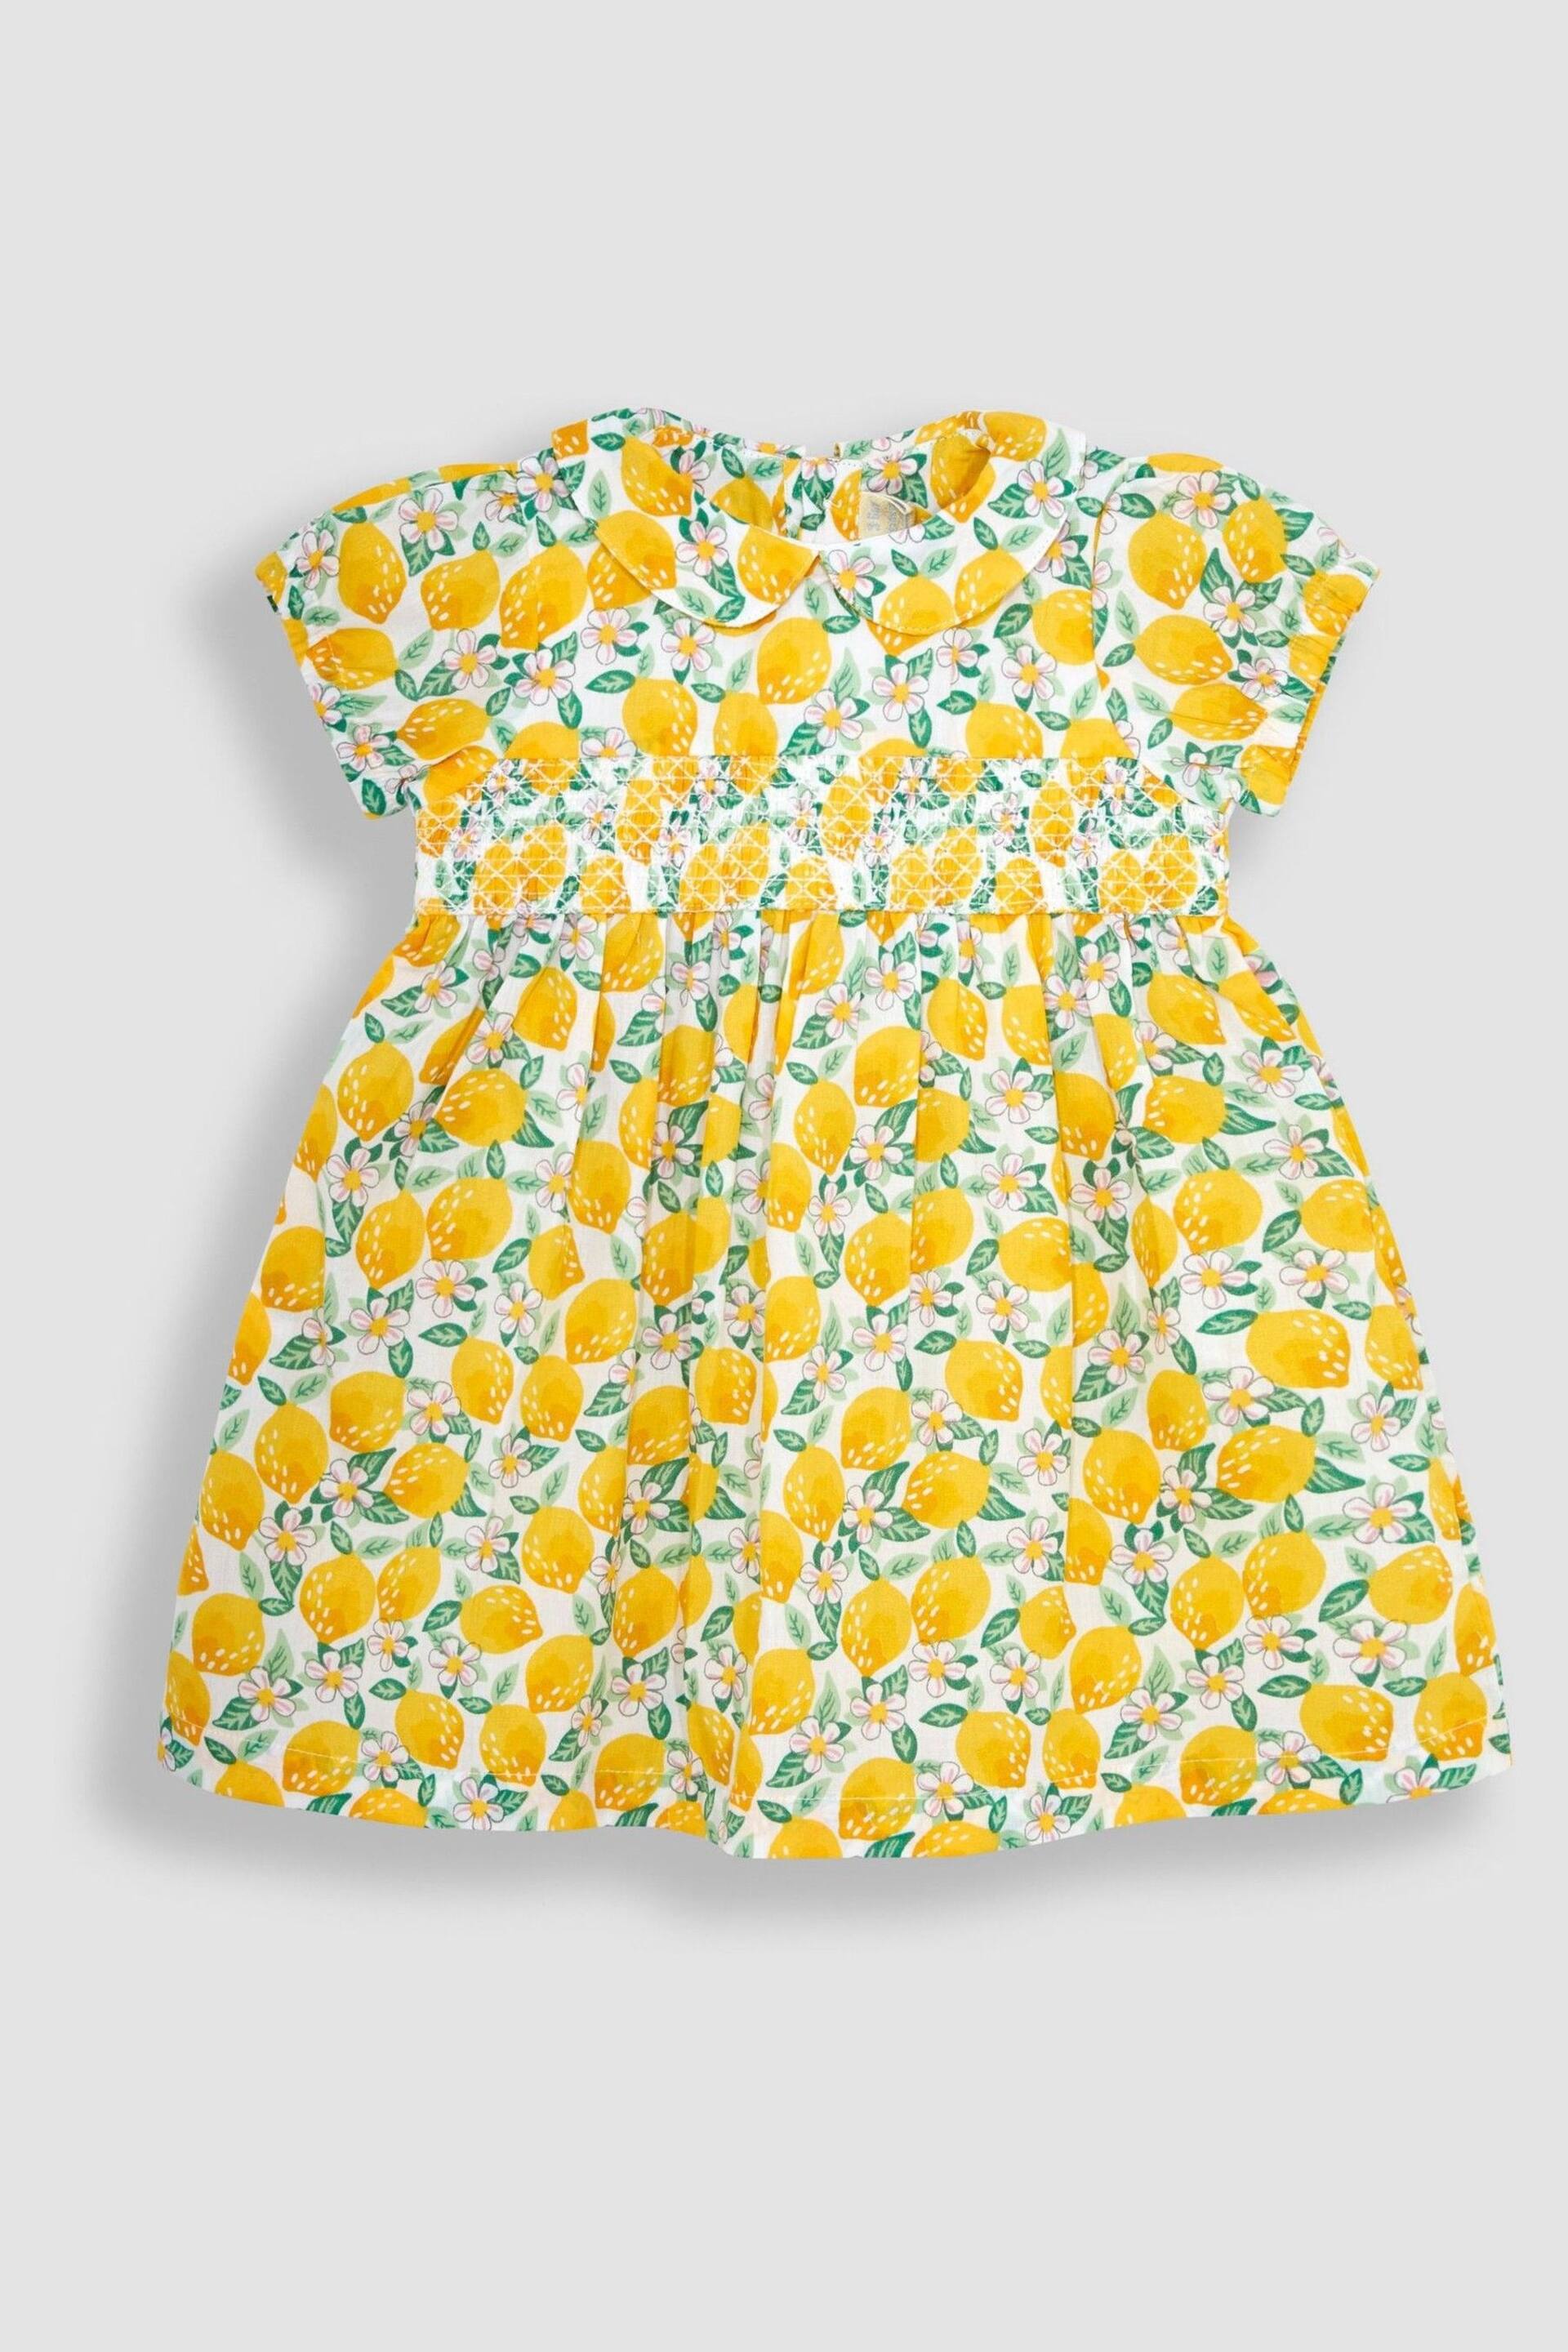 JoJo Maman Bébé White Lemon Bloom Smocked Dress - Image 2 of 4